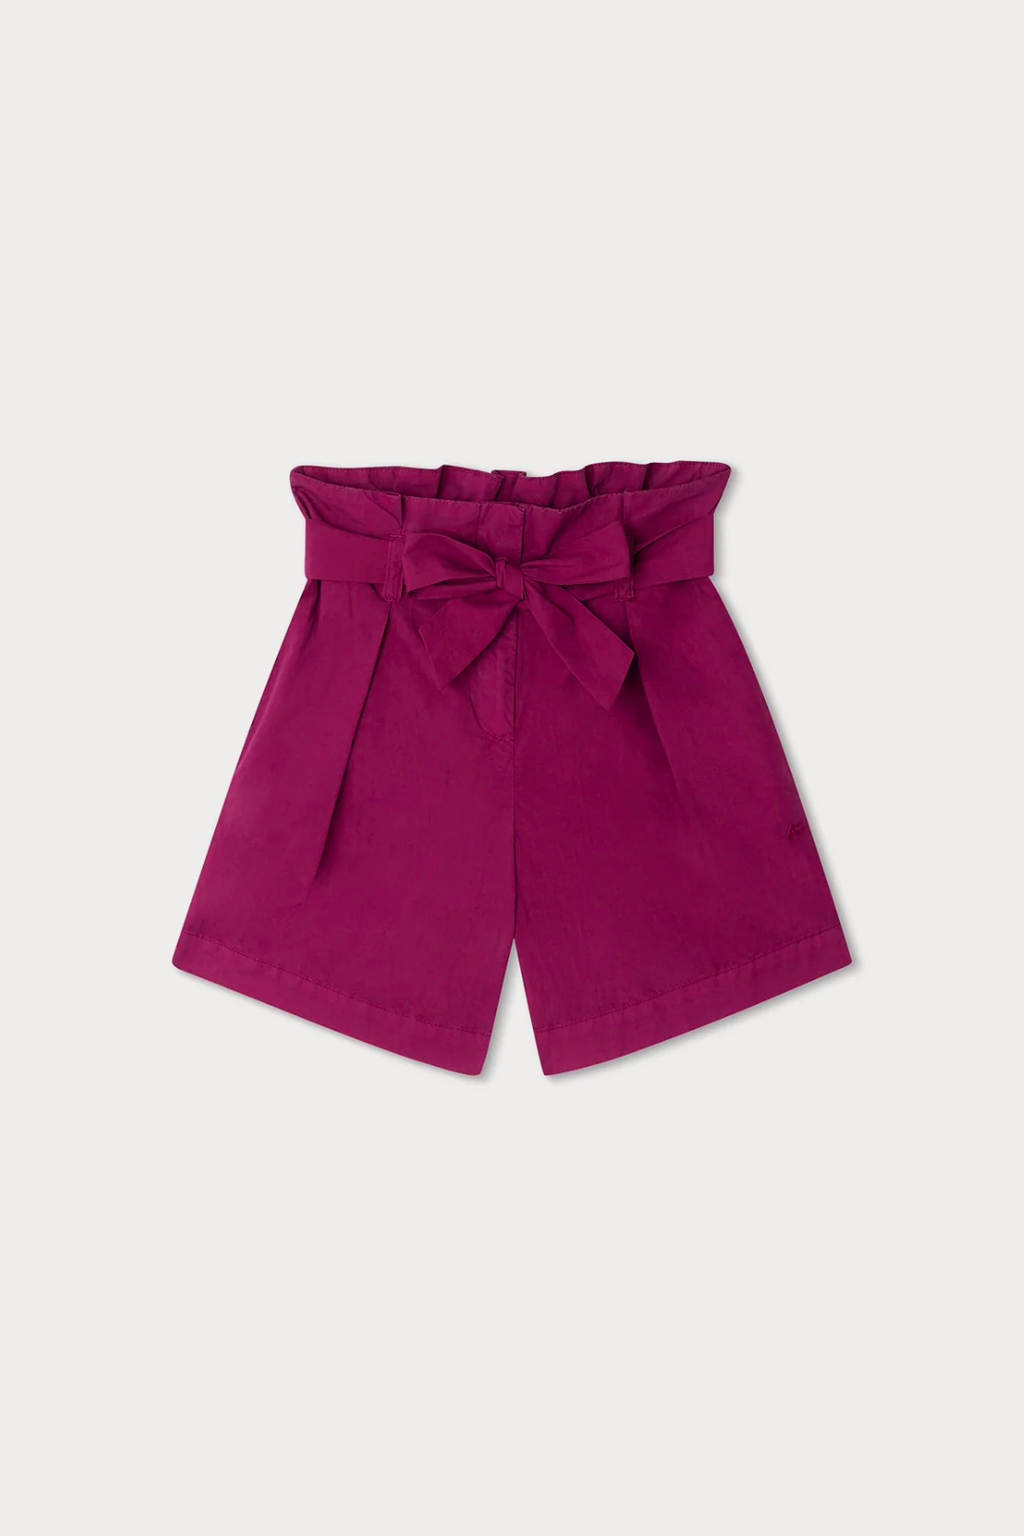 Purple Nath shorts